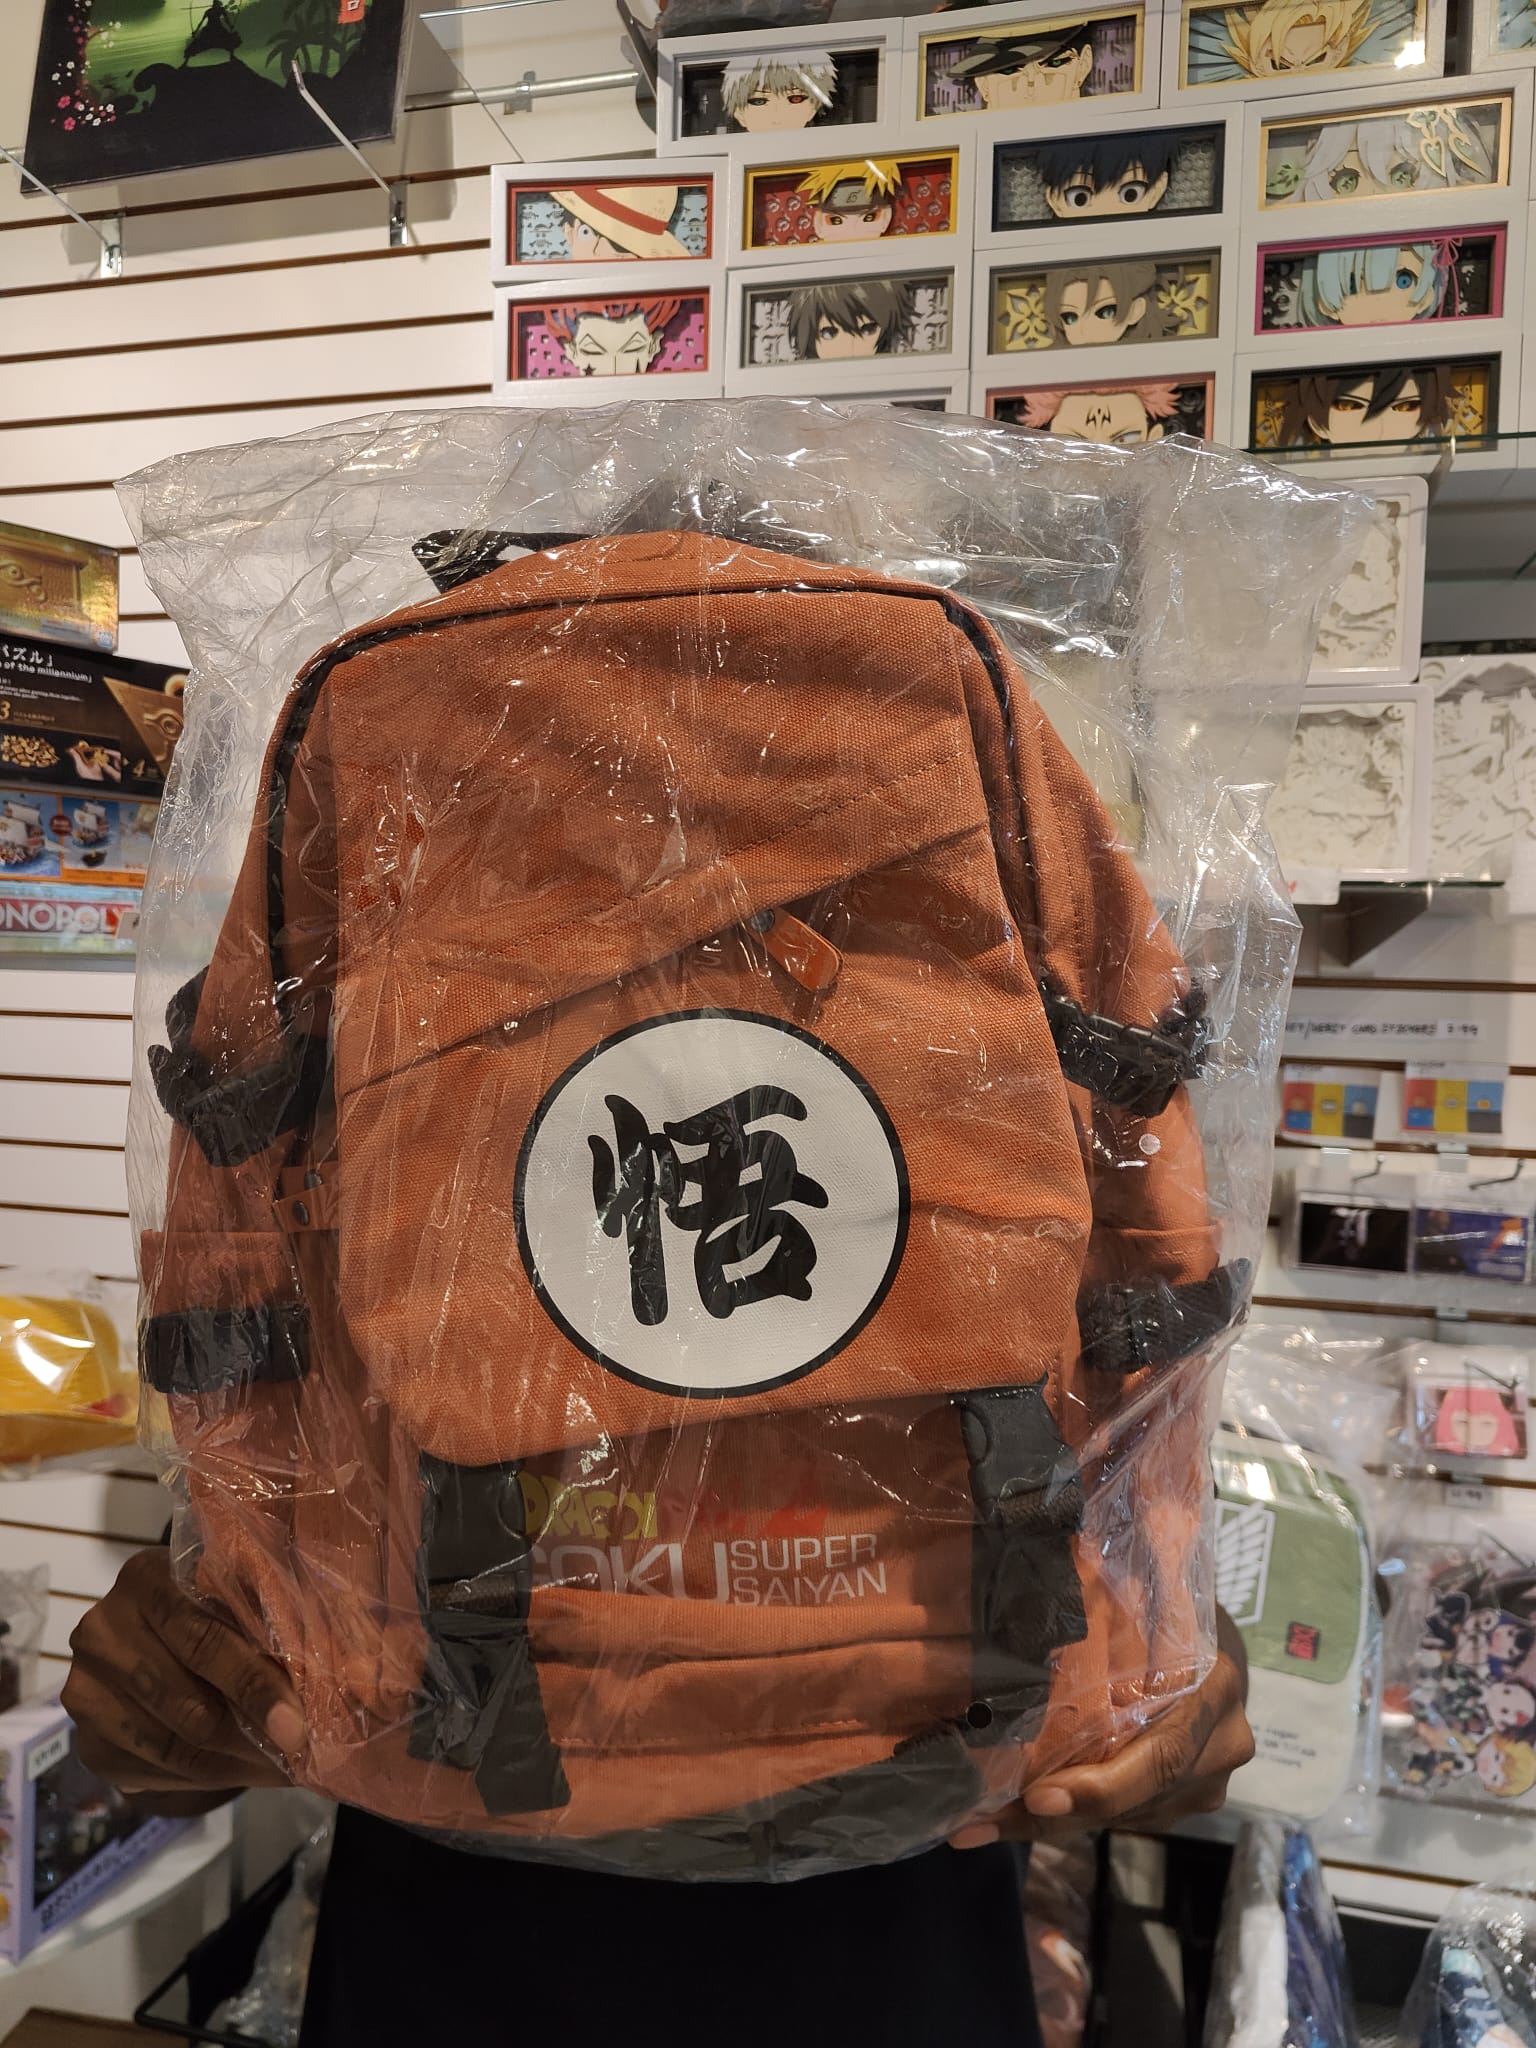 Dragon Ball Z Backpack,Dragon Ball Z Backpacks